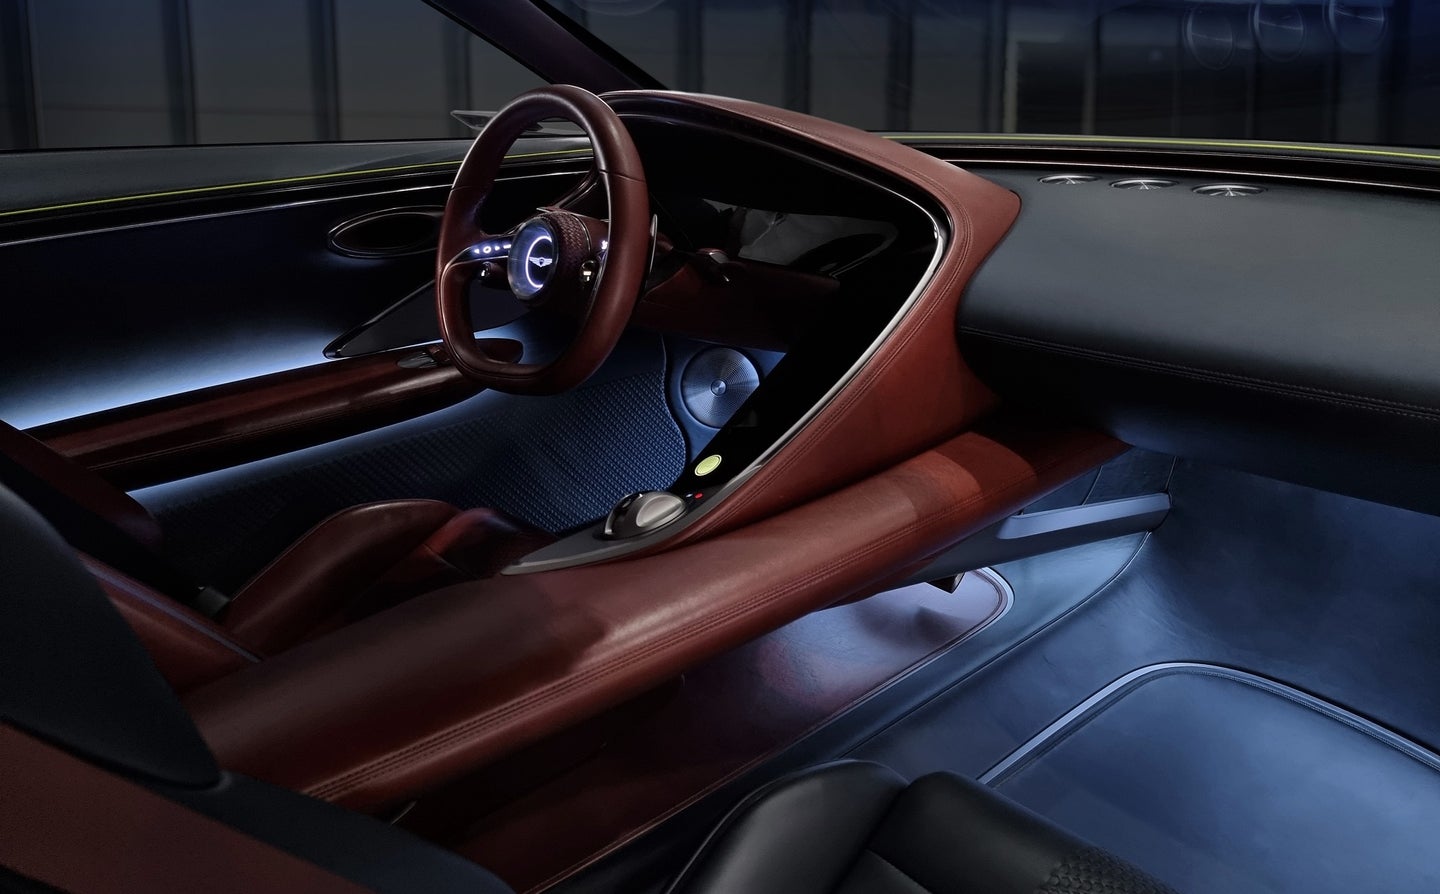 Genesis Concept X Electric Car interior shot